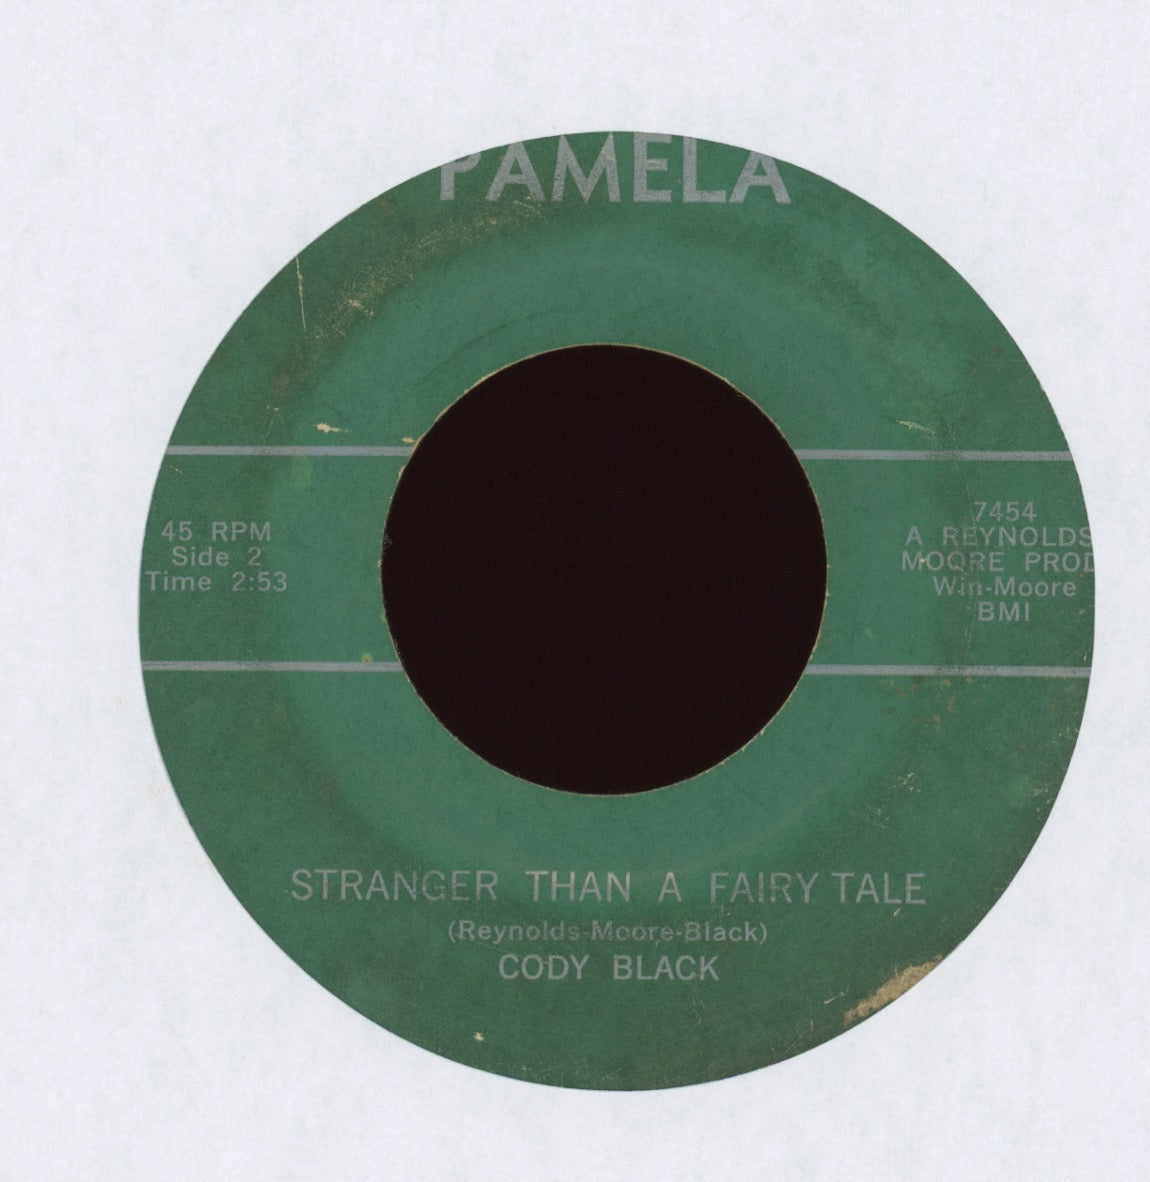 Cody Black - Stranger Than a Fairy Tale on Pamela Northern Soul 45